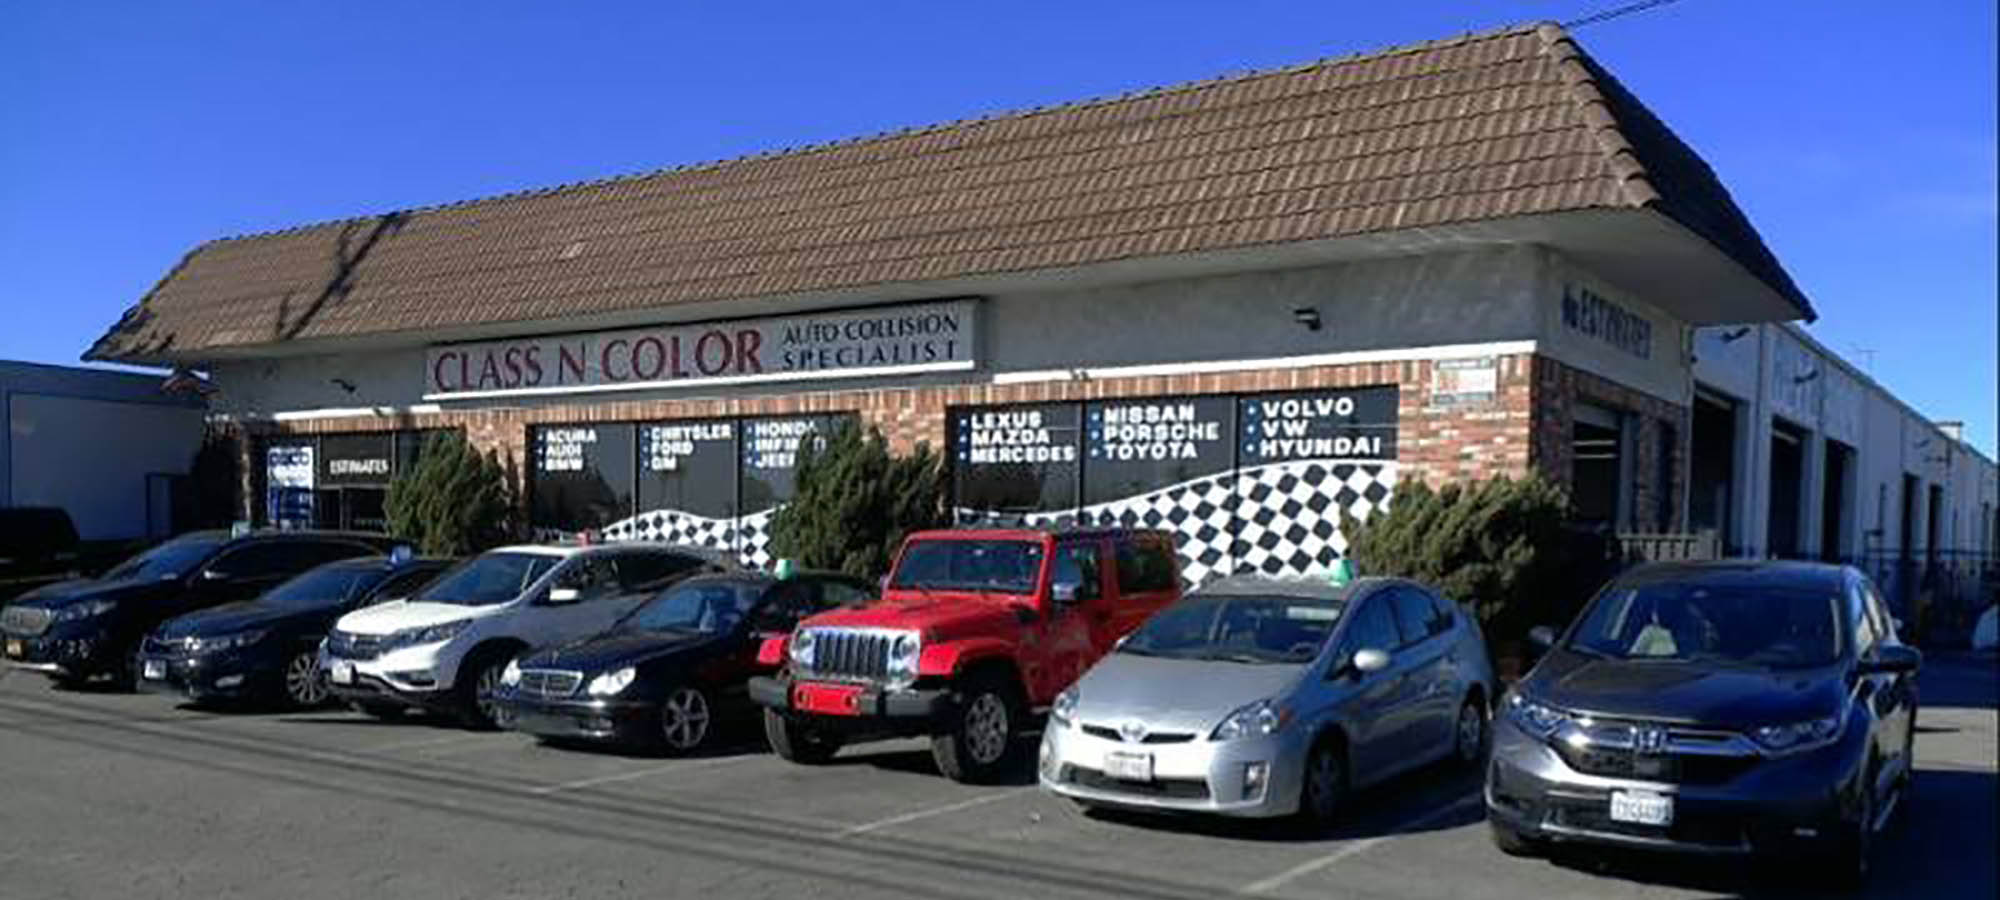 Class N Color Auto Collision - Auto Body Specialists Los Angeles CA